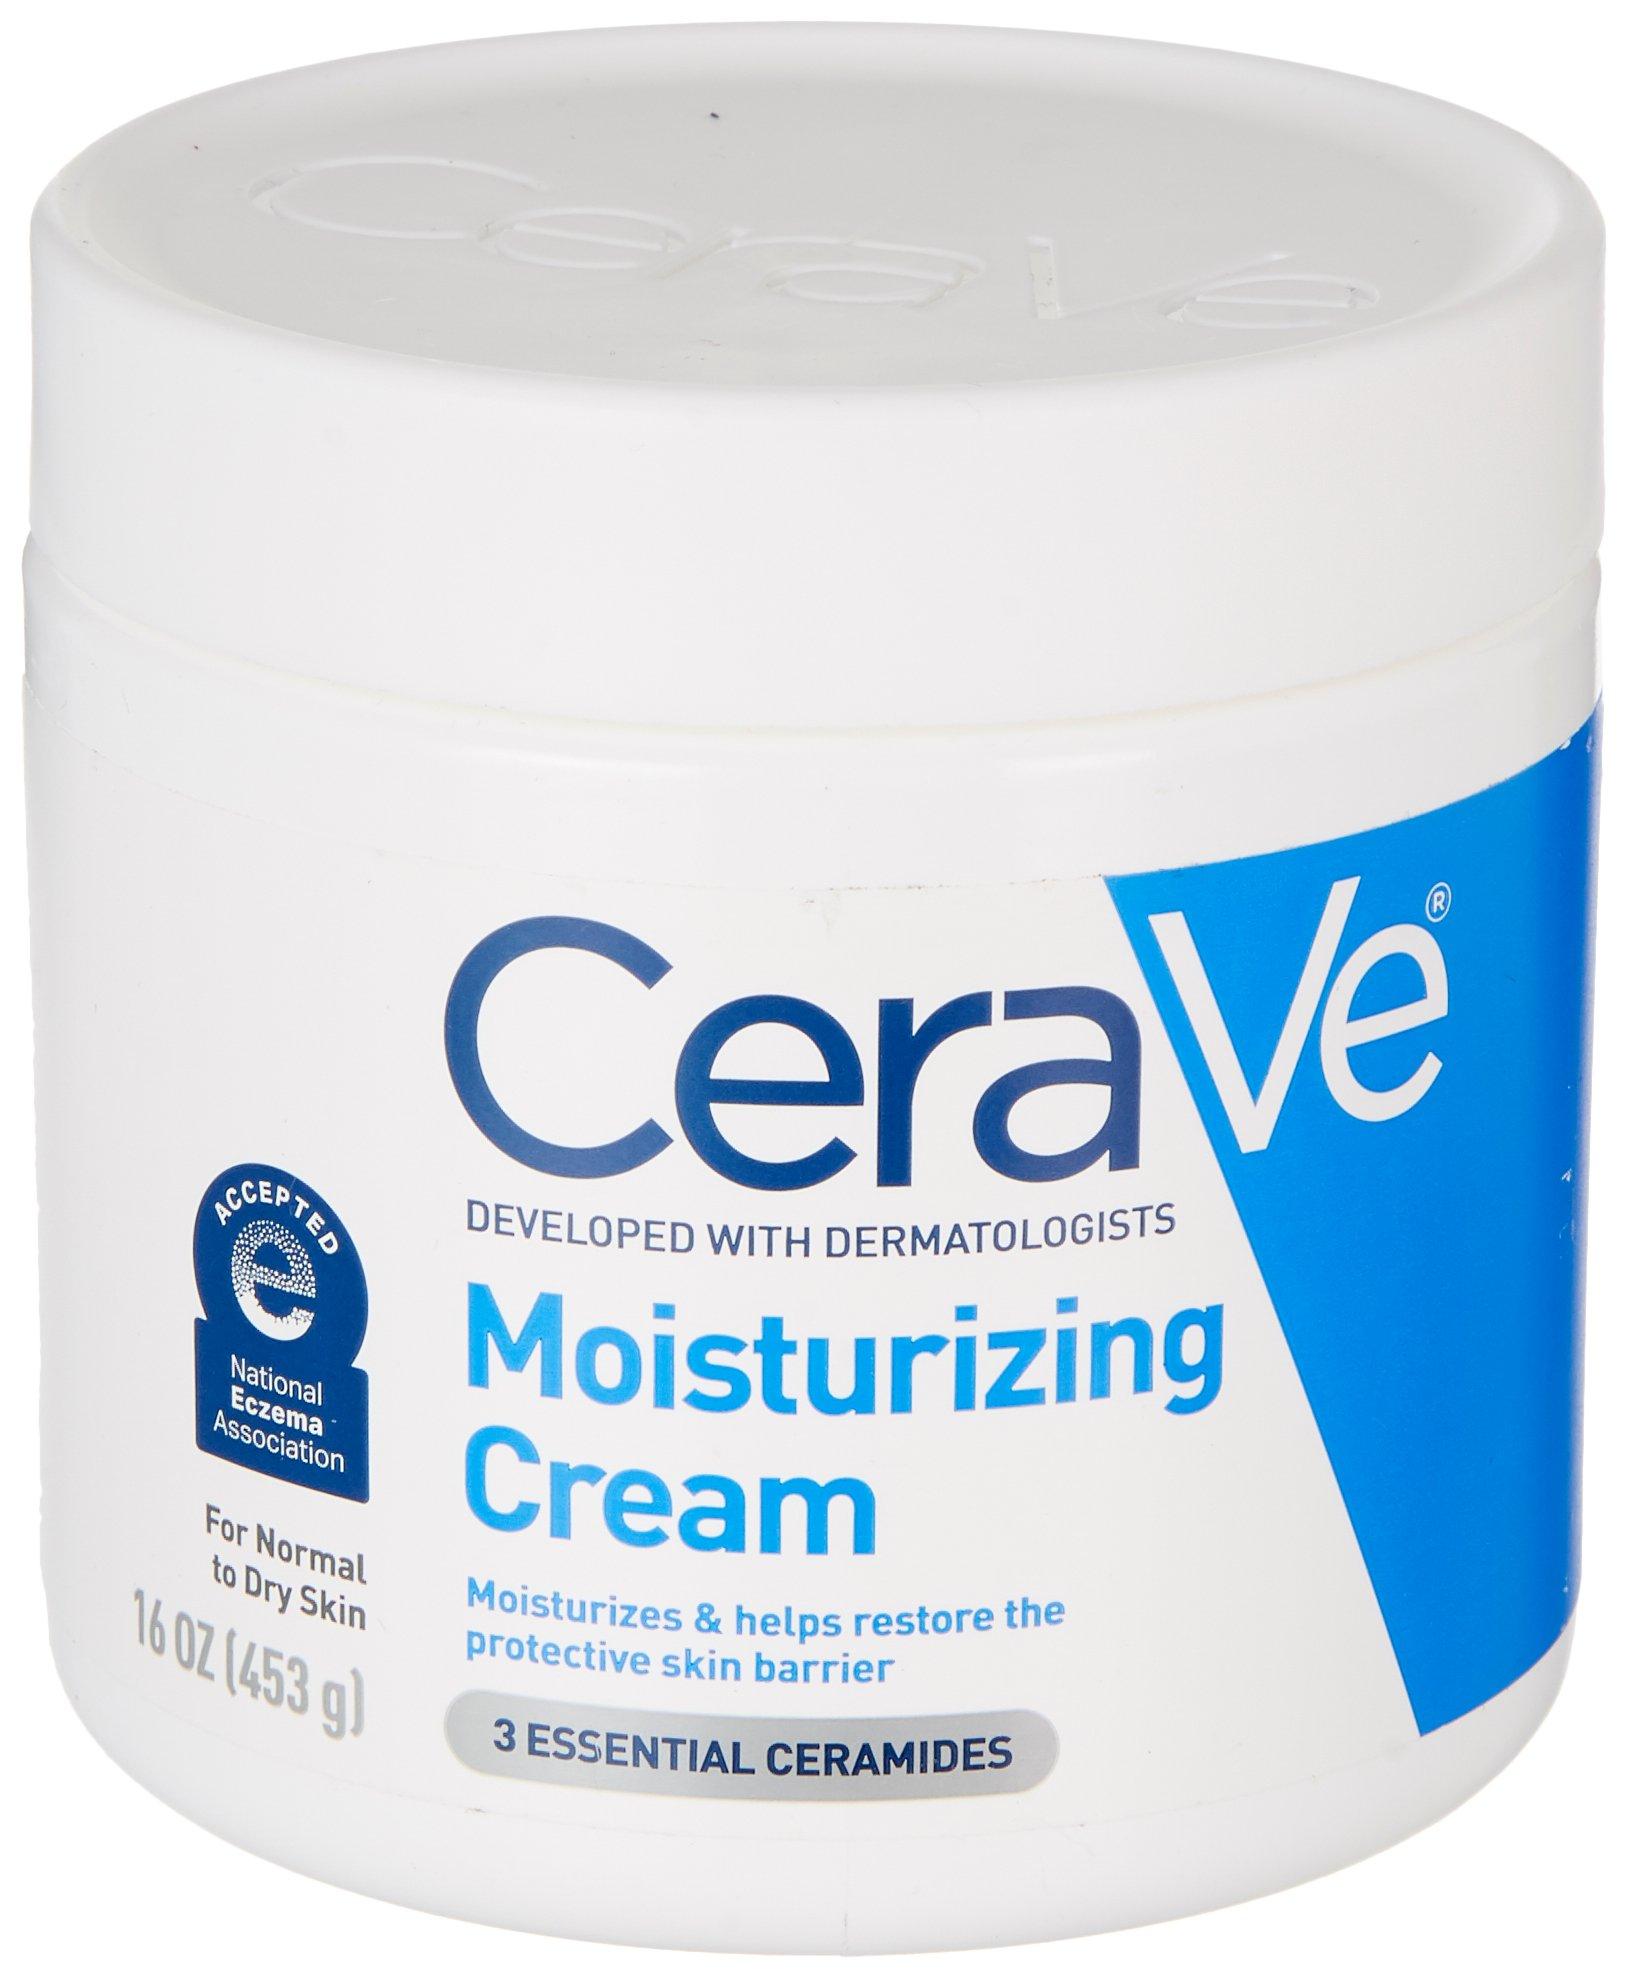 16 oz Moisturizing Cream